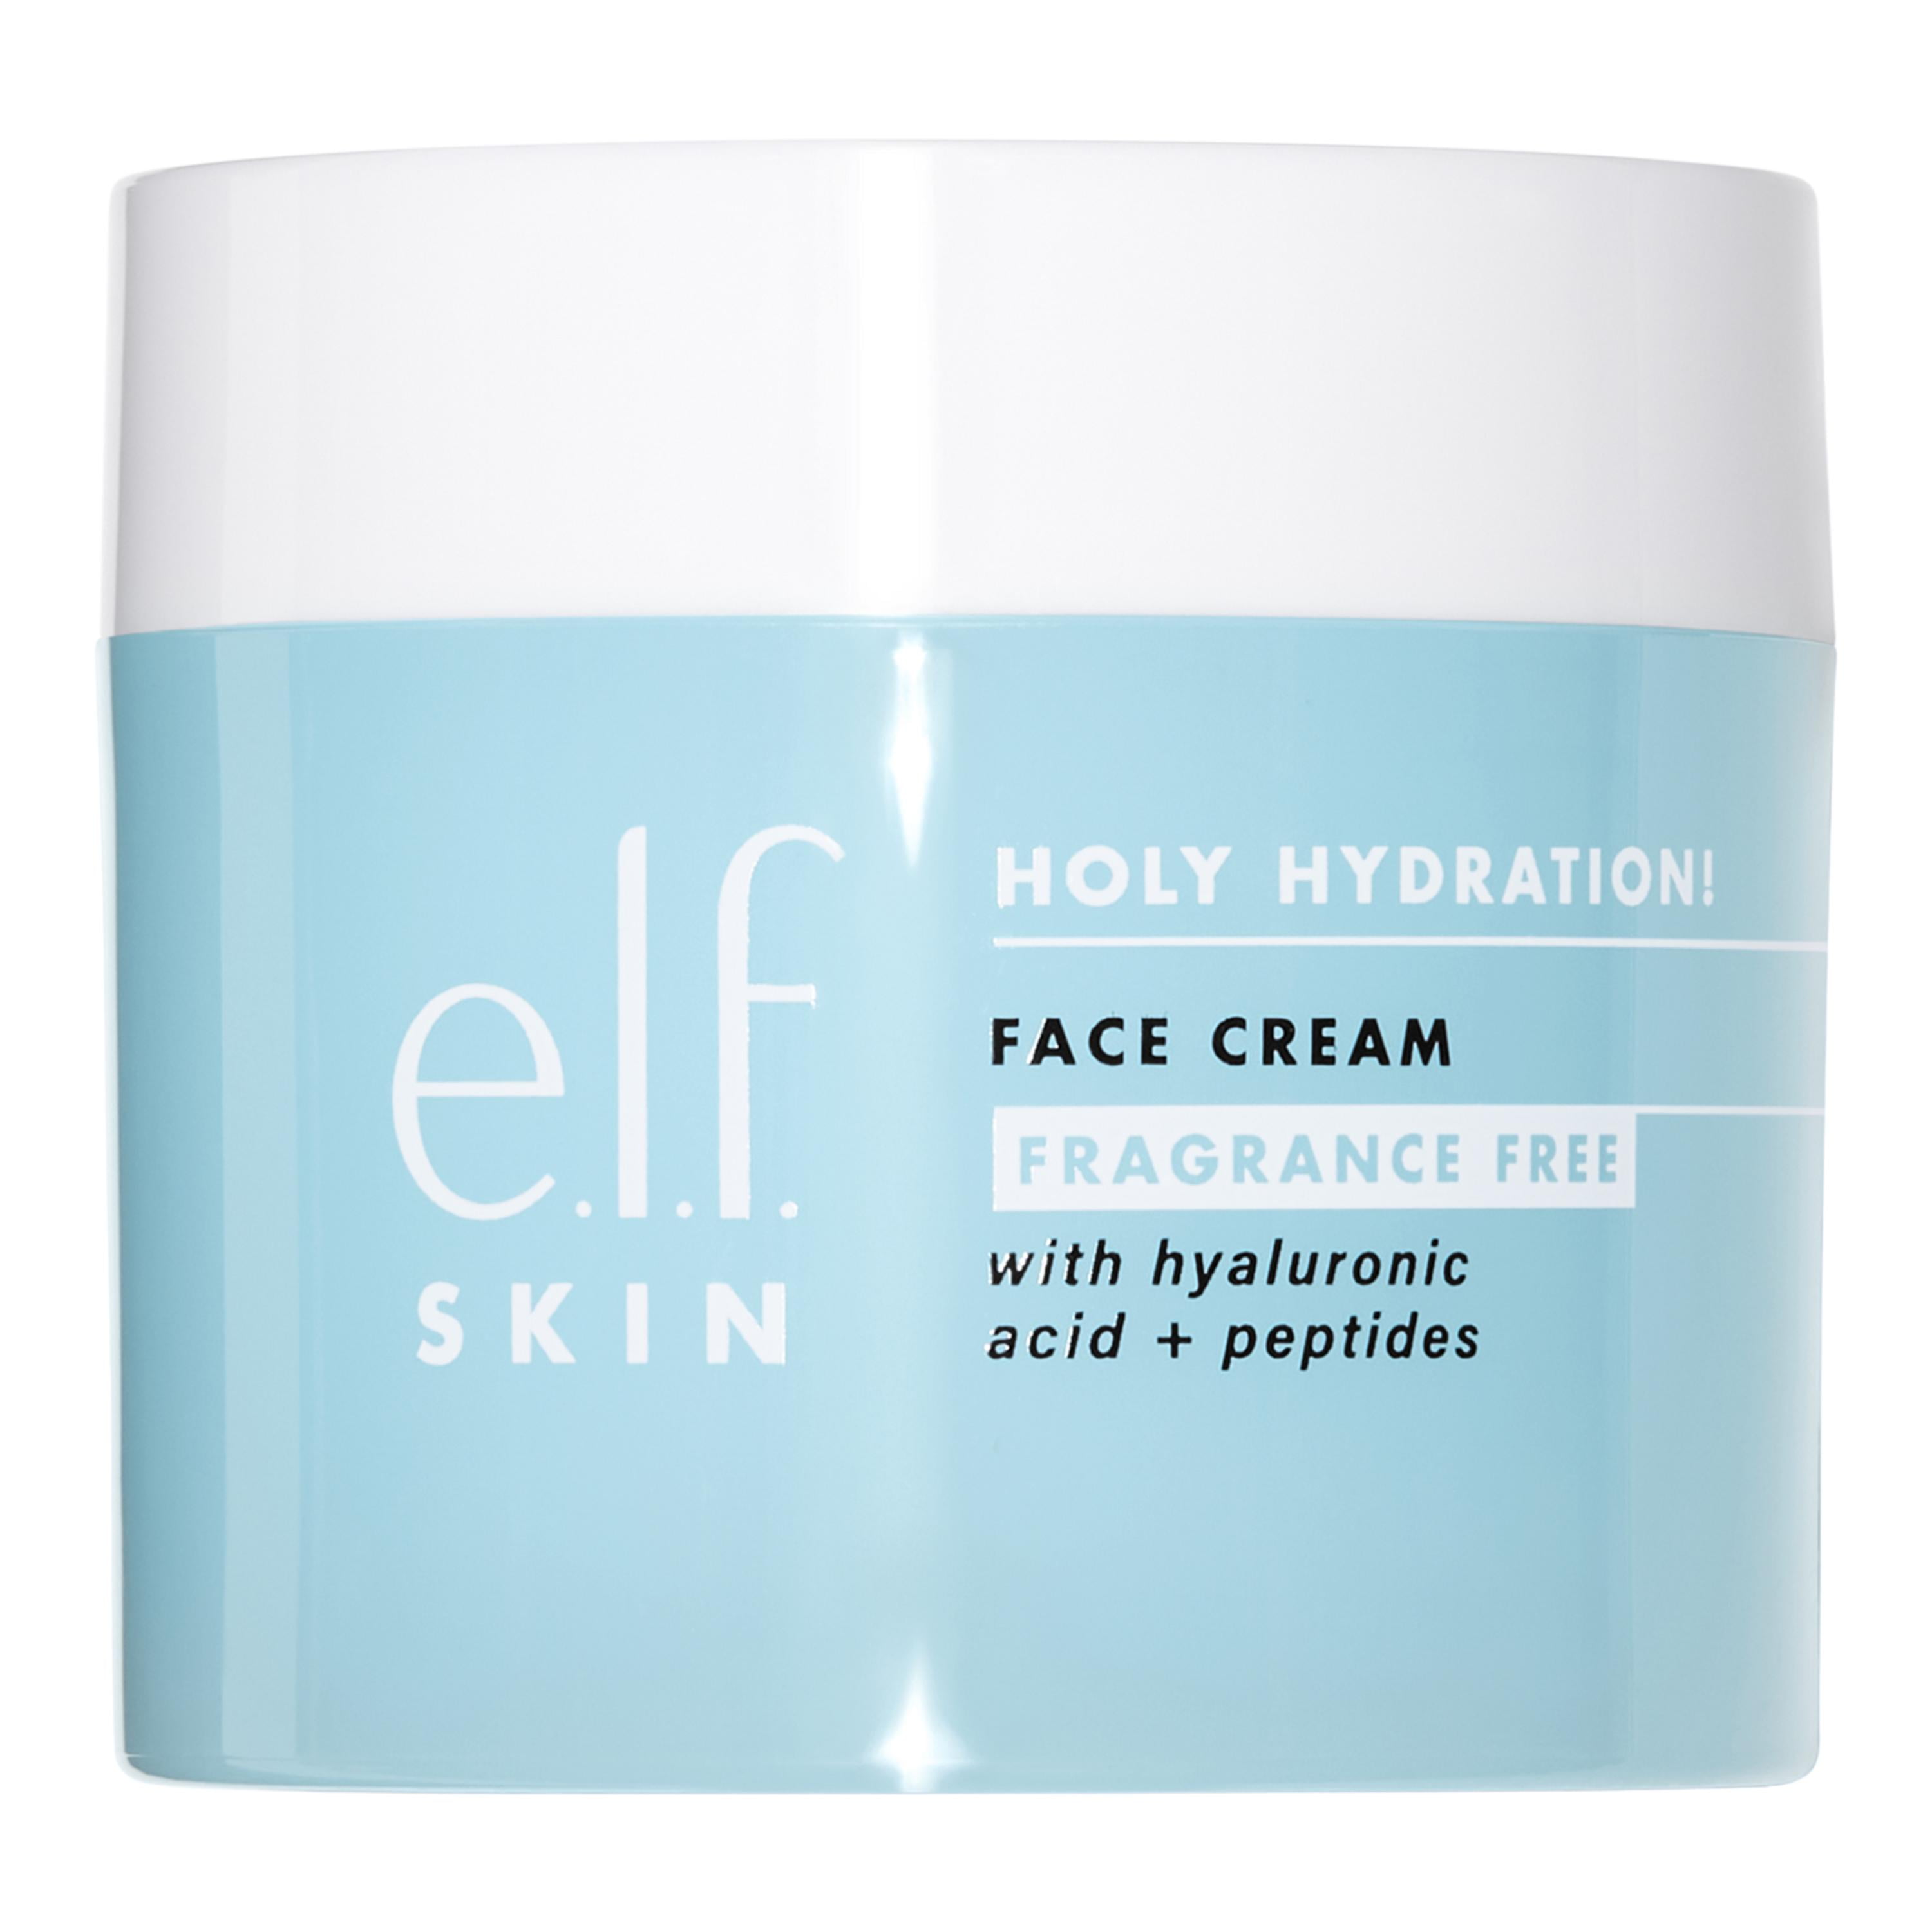 e.l.f. SKIN Holy Hydration! Face Cream - Fragrance Free